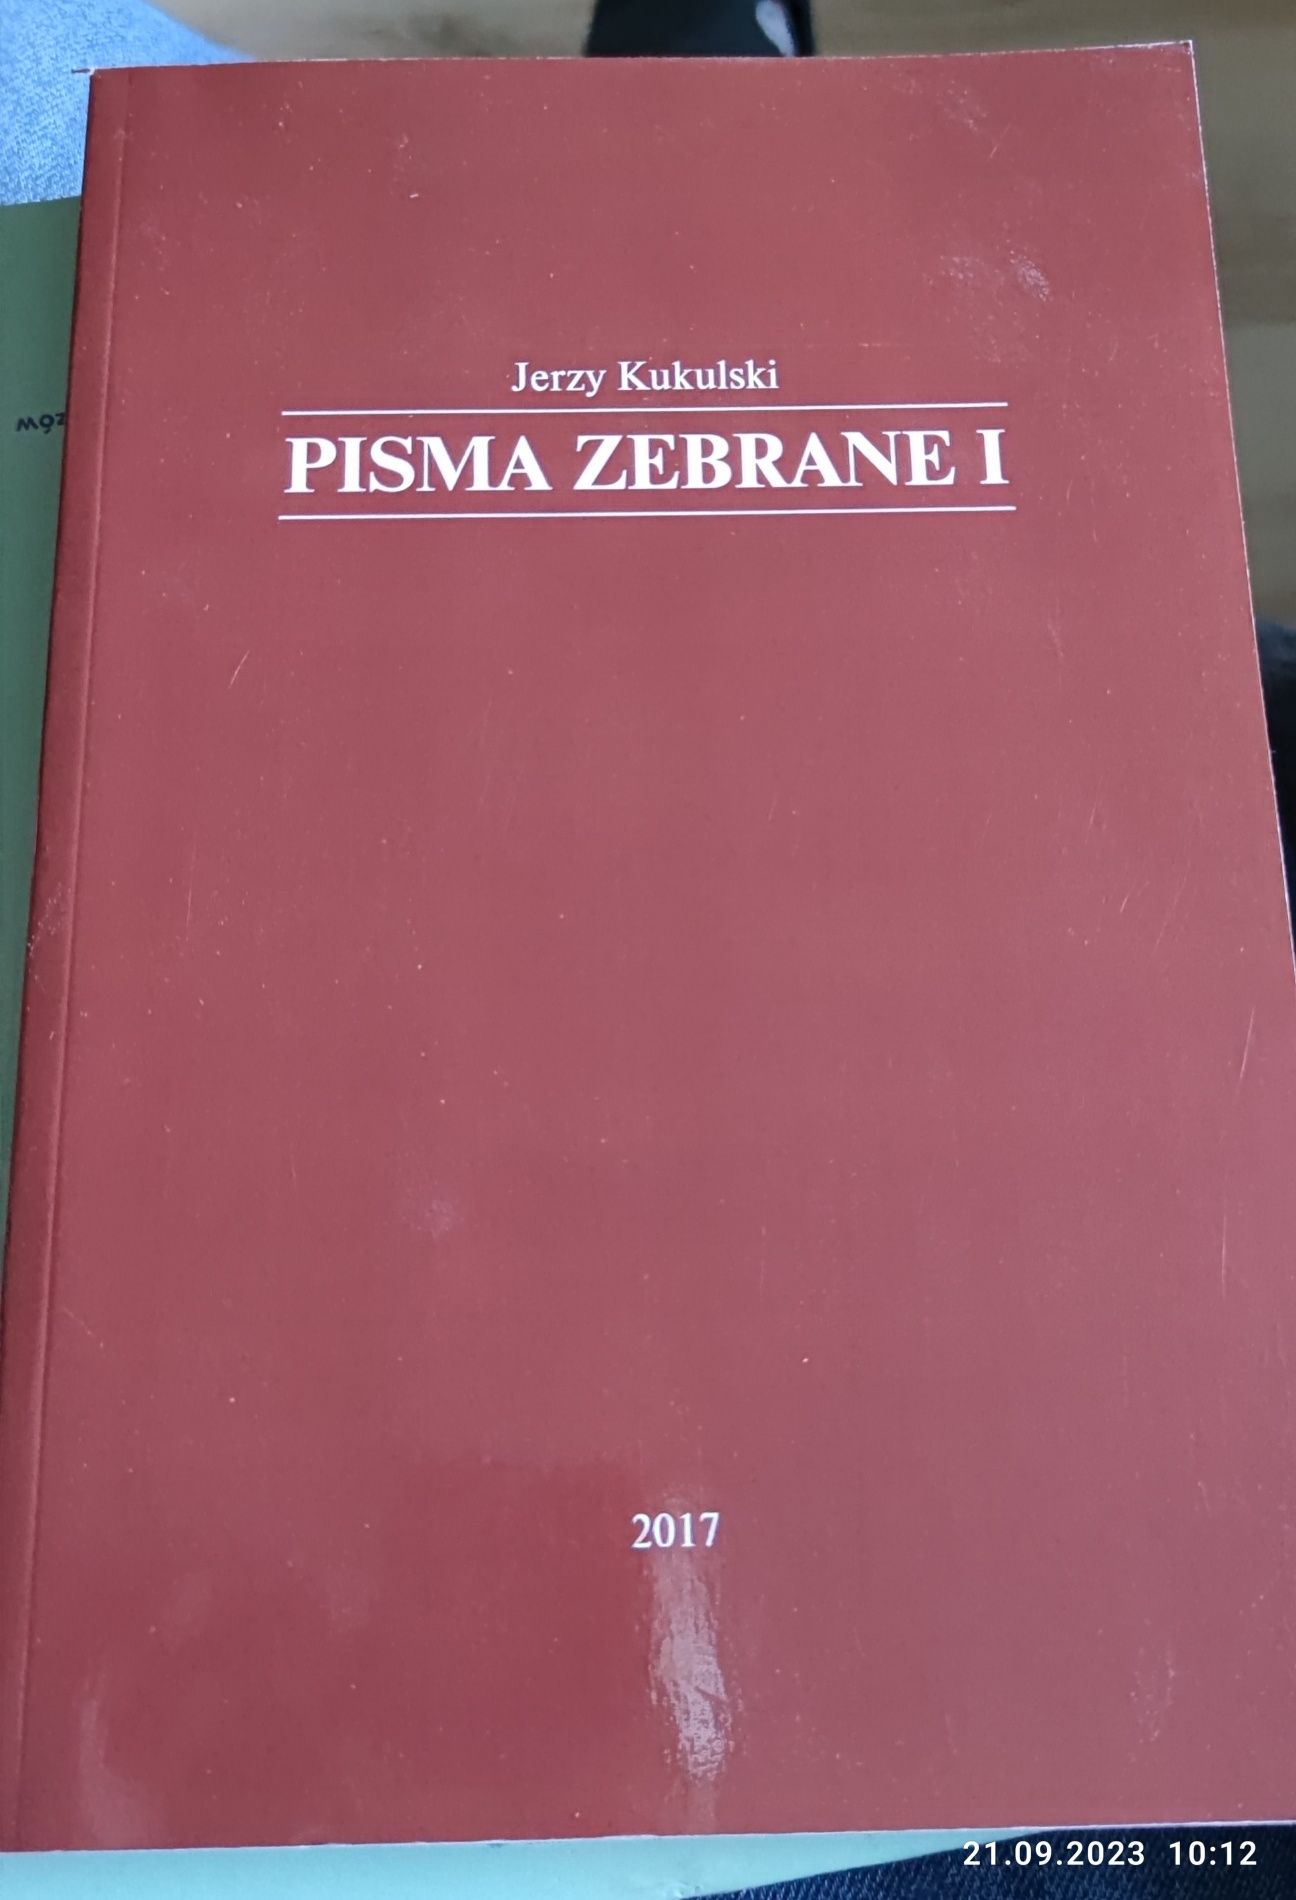 Książka Jerzy Kukulski